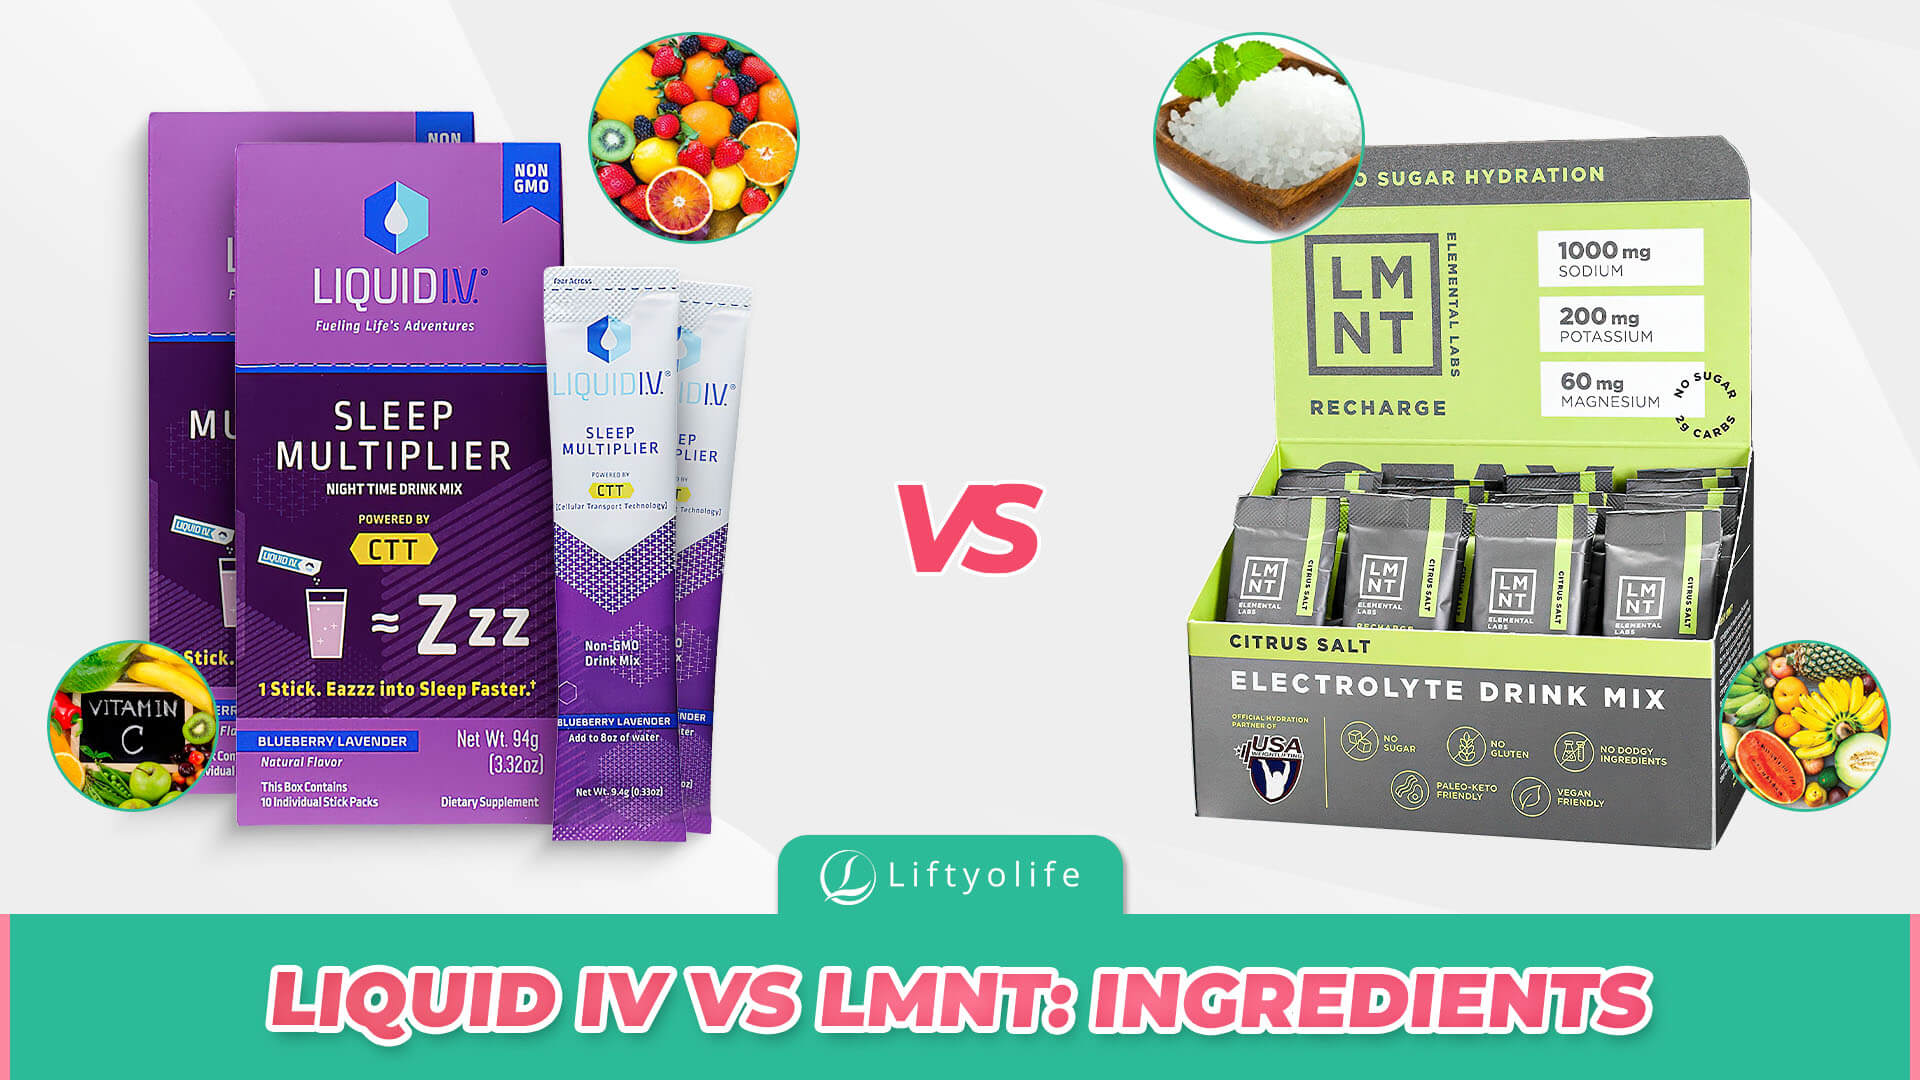 LMNT vs Liquid IV: The Ingredients